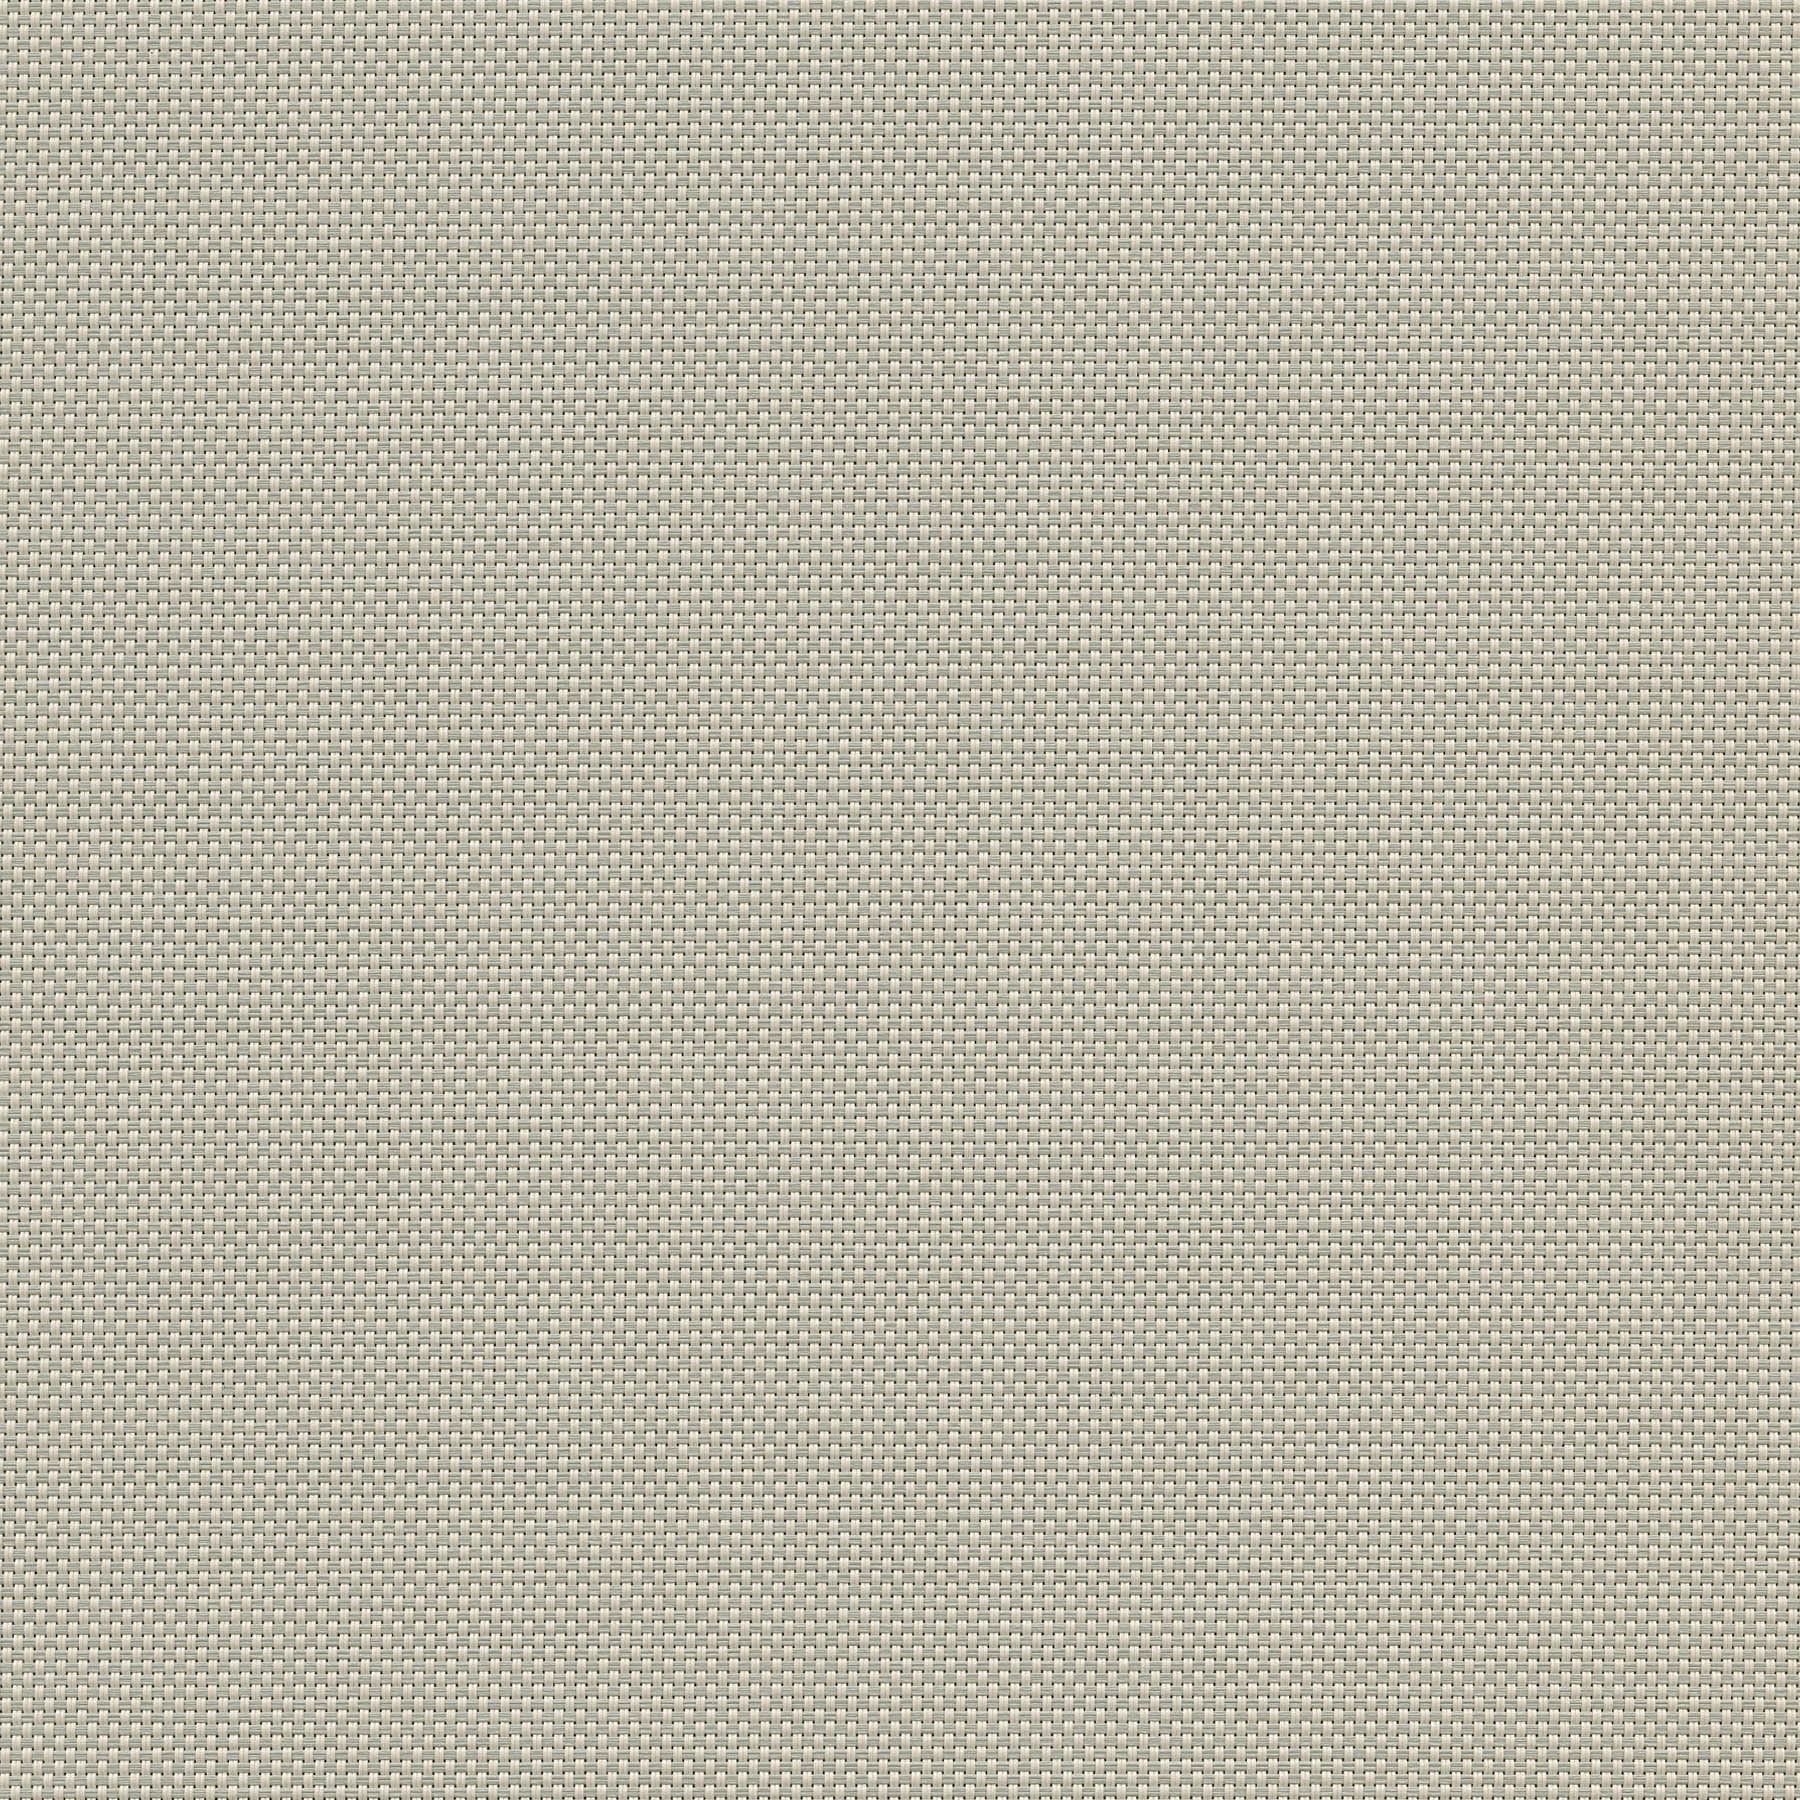 Altex - Fabric - SHEERWEAVE 2410 - Beige-Pearl Grey - 41Q21